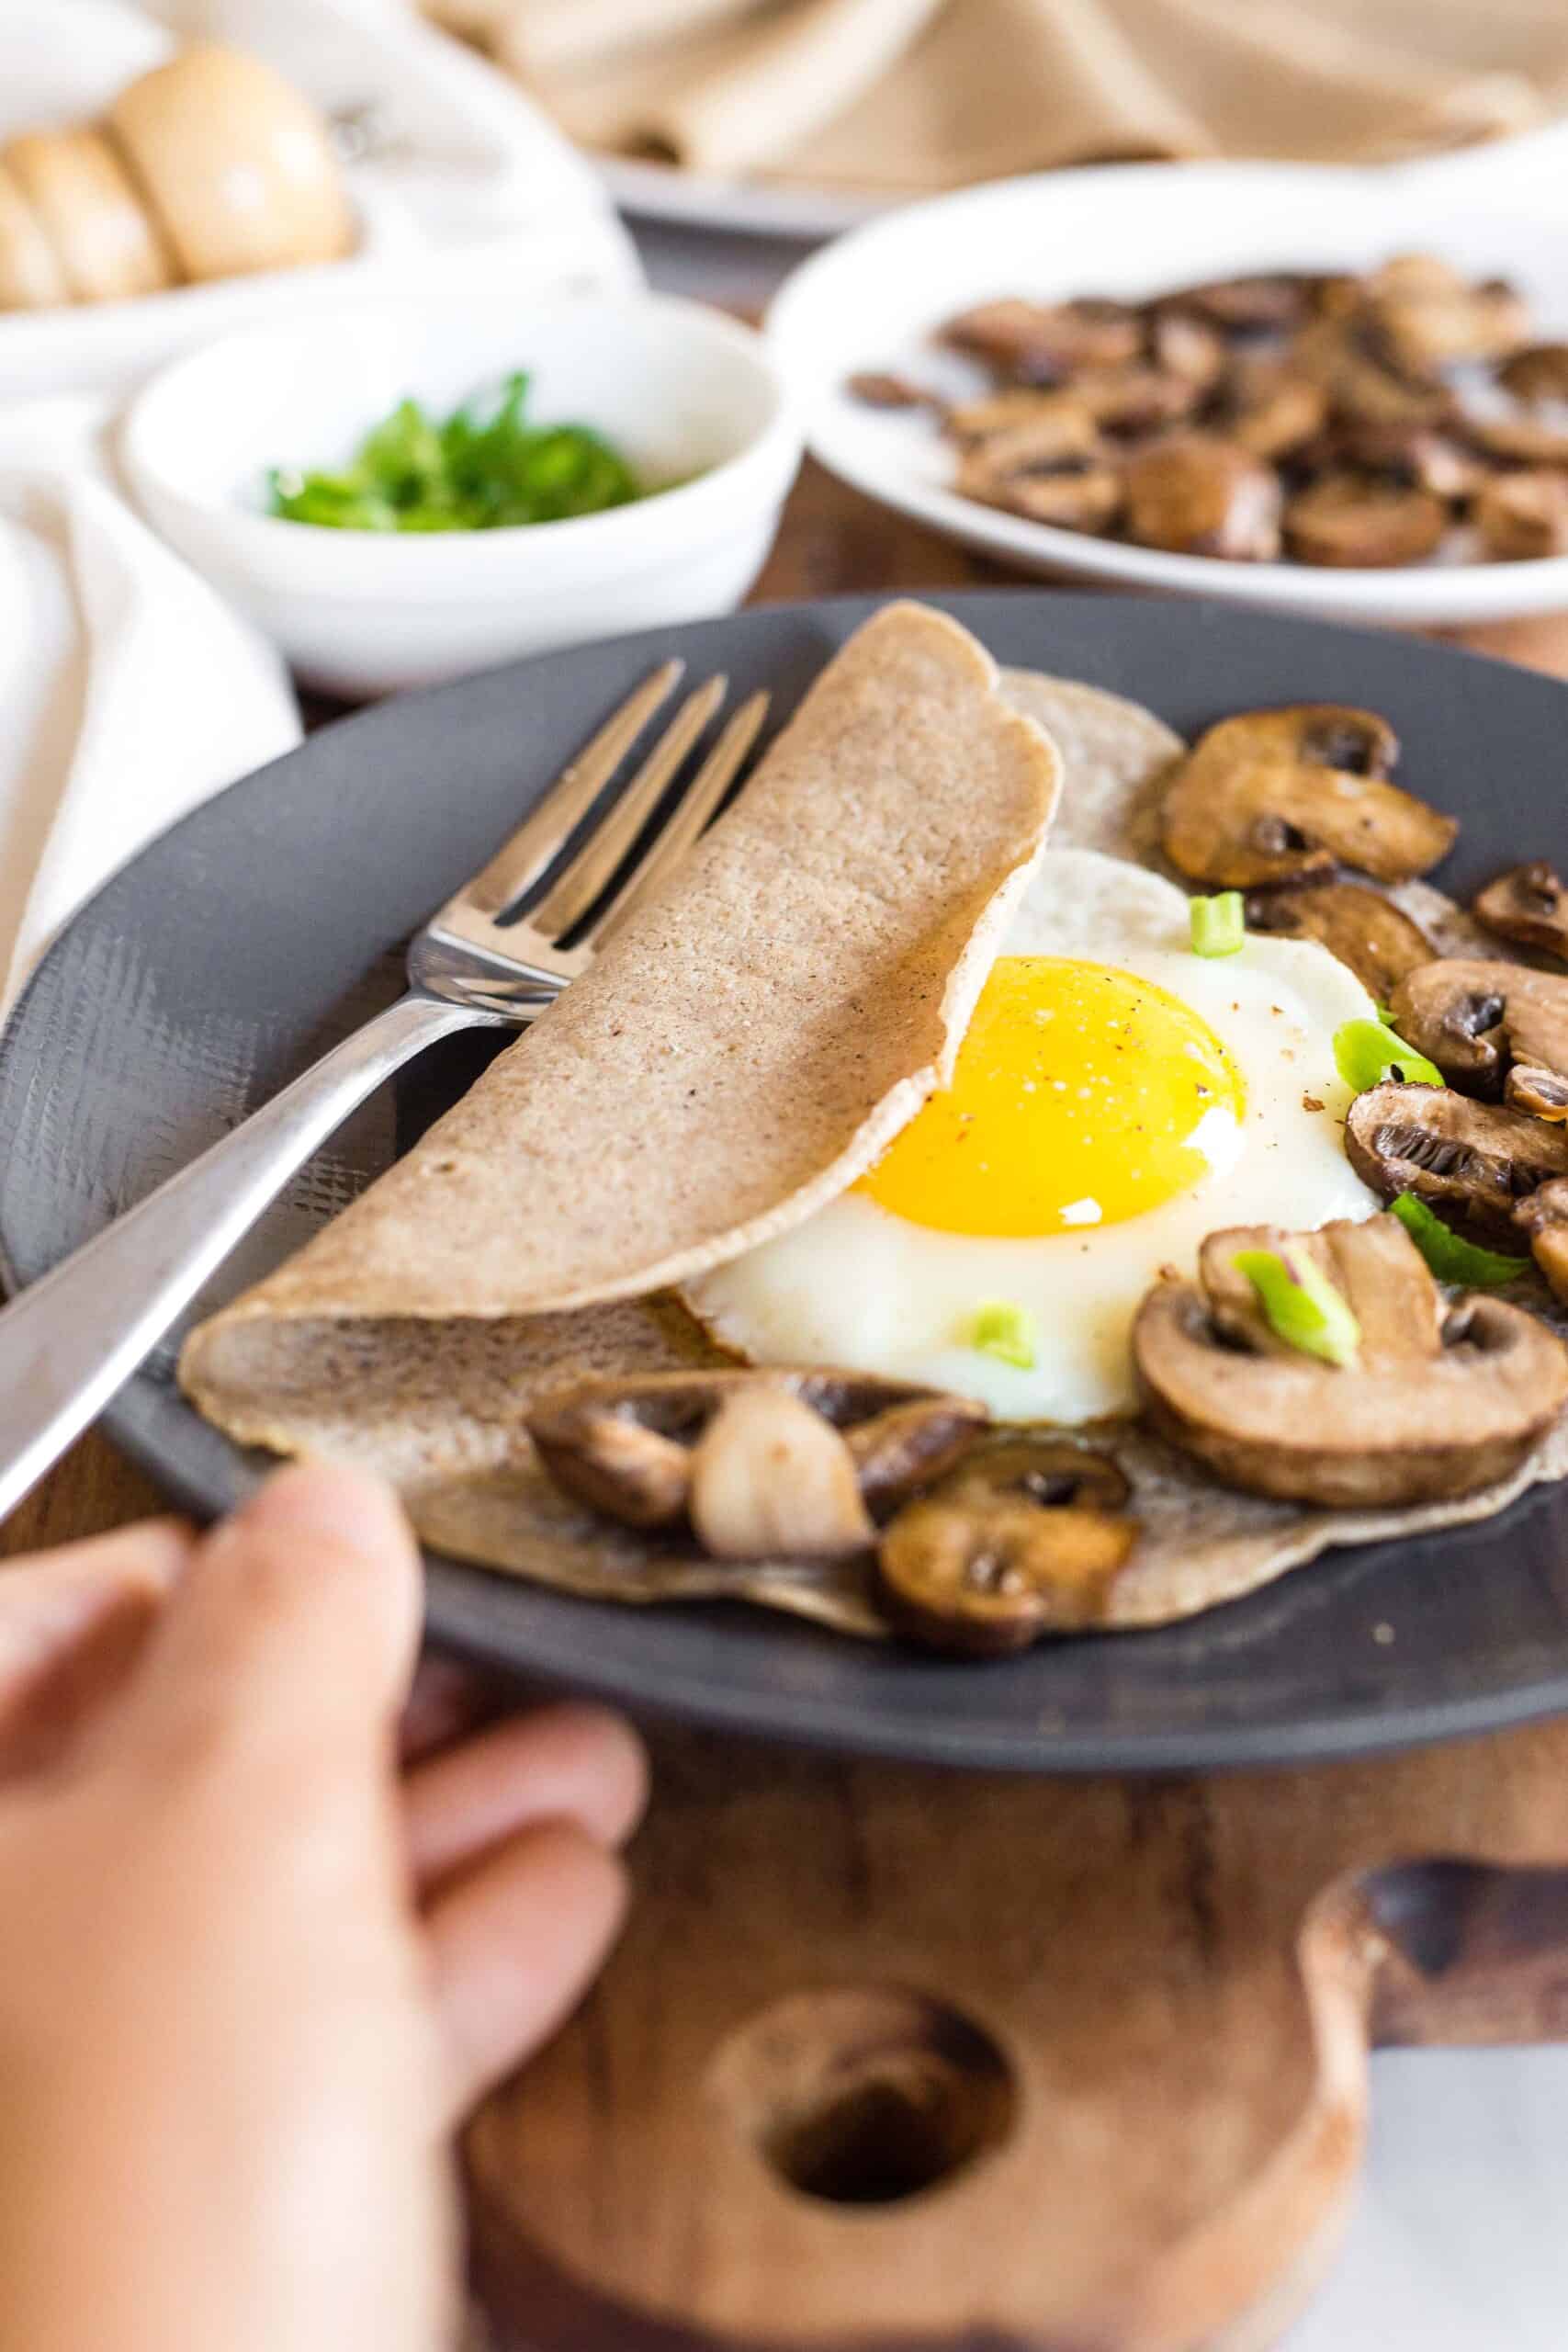 Savory buckwheat crepes with a fried egg and sautéed mushrooms on a grey plate.